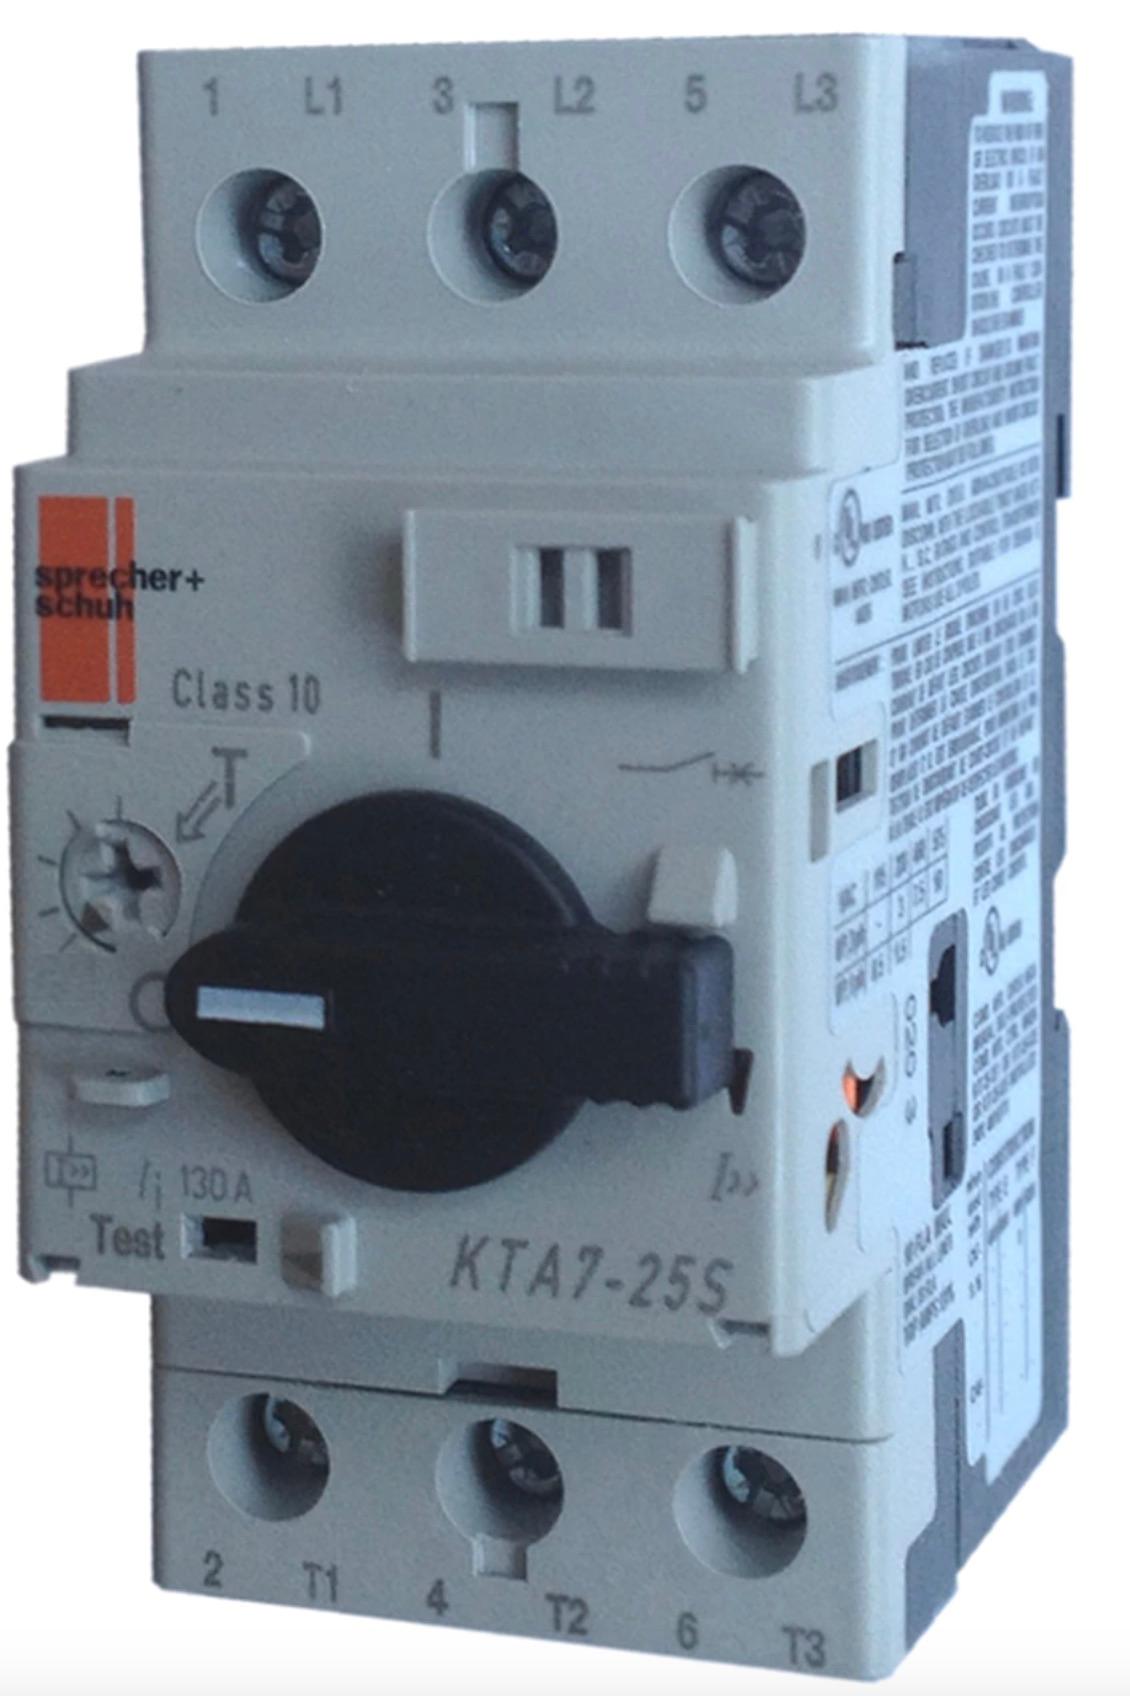 Sprecher + Schuh KTA7-25S-1A Manual motor controller, 13 Amps, 0.63...1.0 A Current Adjustment Range , Standard Interrupting Capacity